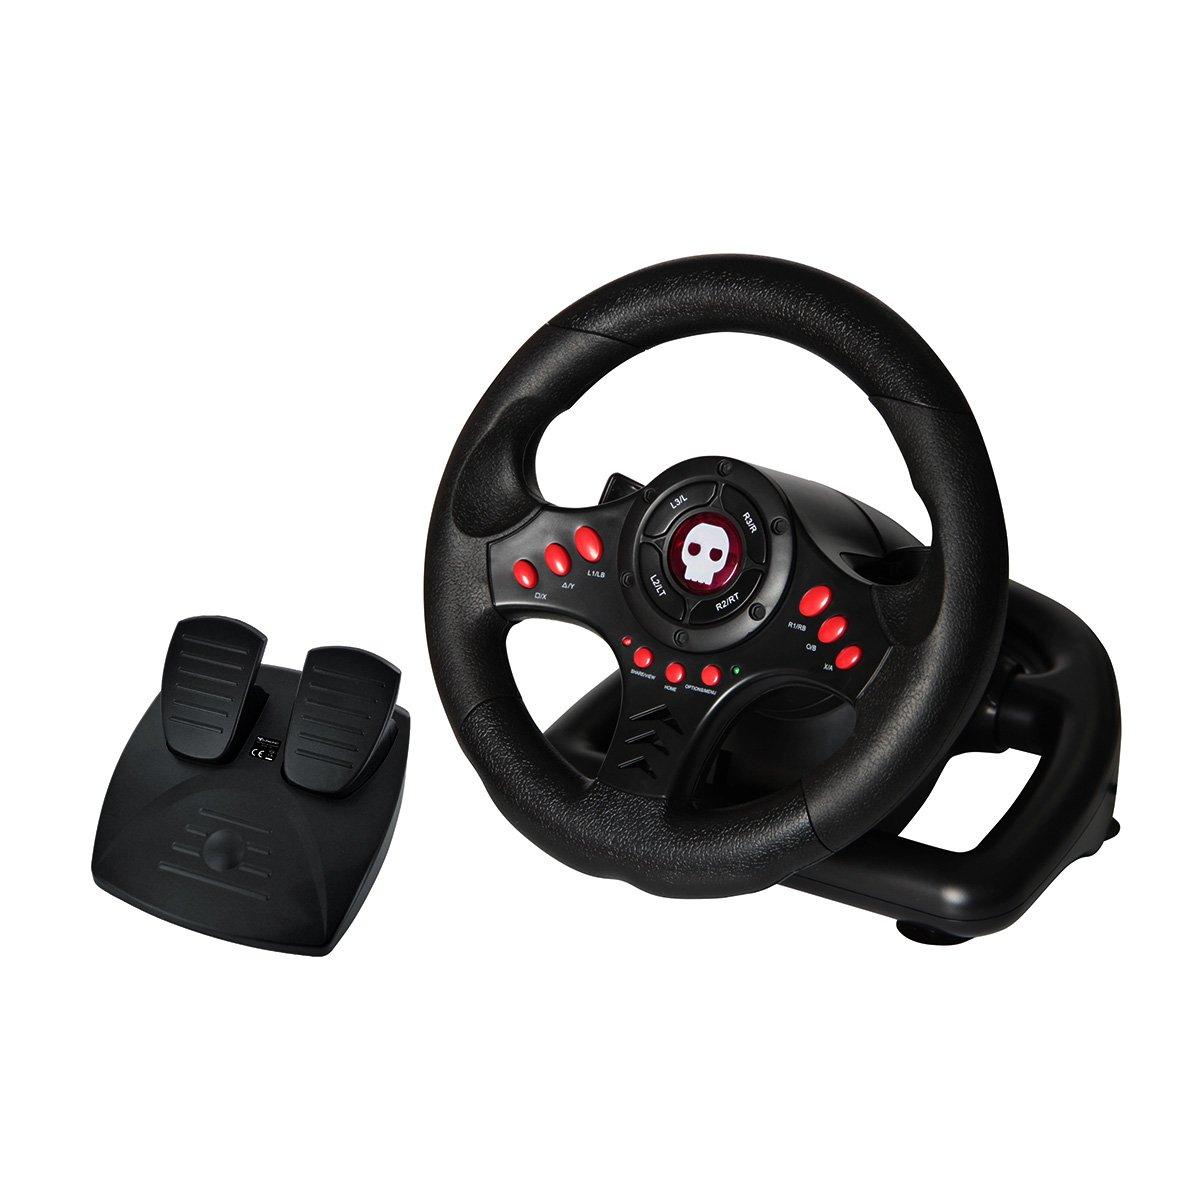 list item 1 of 5 Multi-Format Steering Wheel and Pedals GameStop Exclusive